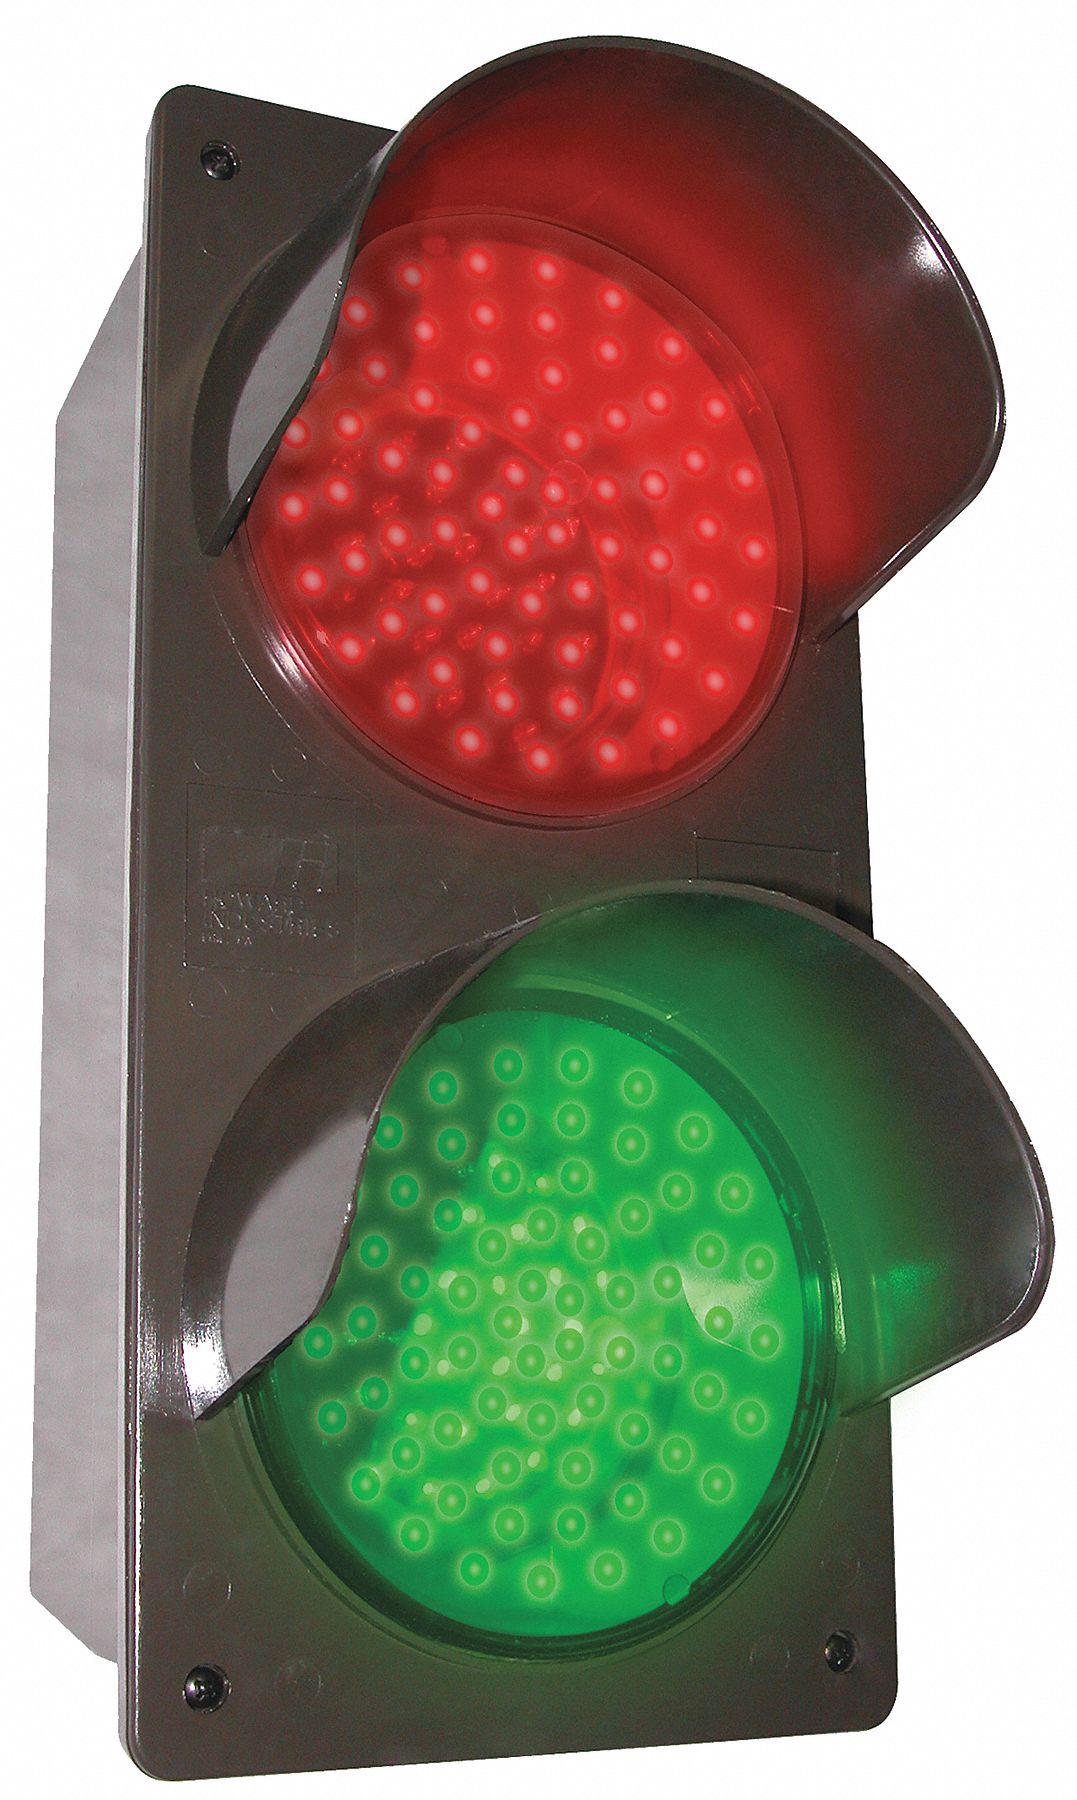 Fundament Outlaw familie Vertical Traffic Signal Light - 55KP10|143468 - Grainger